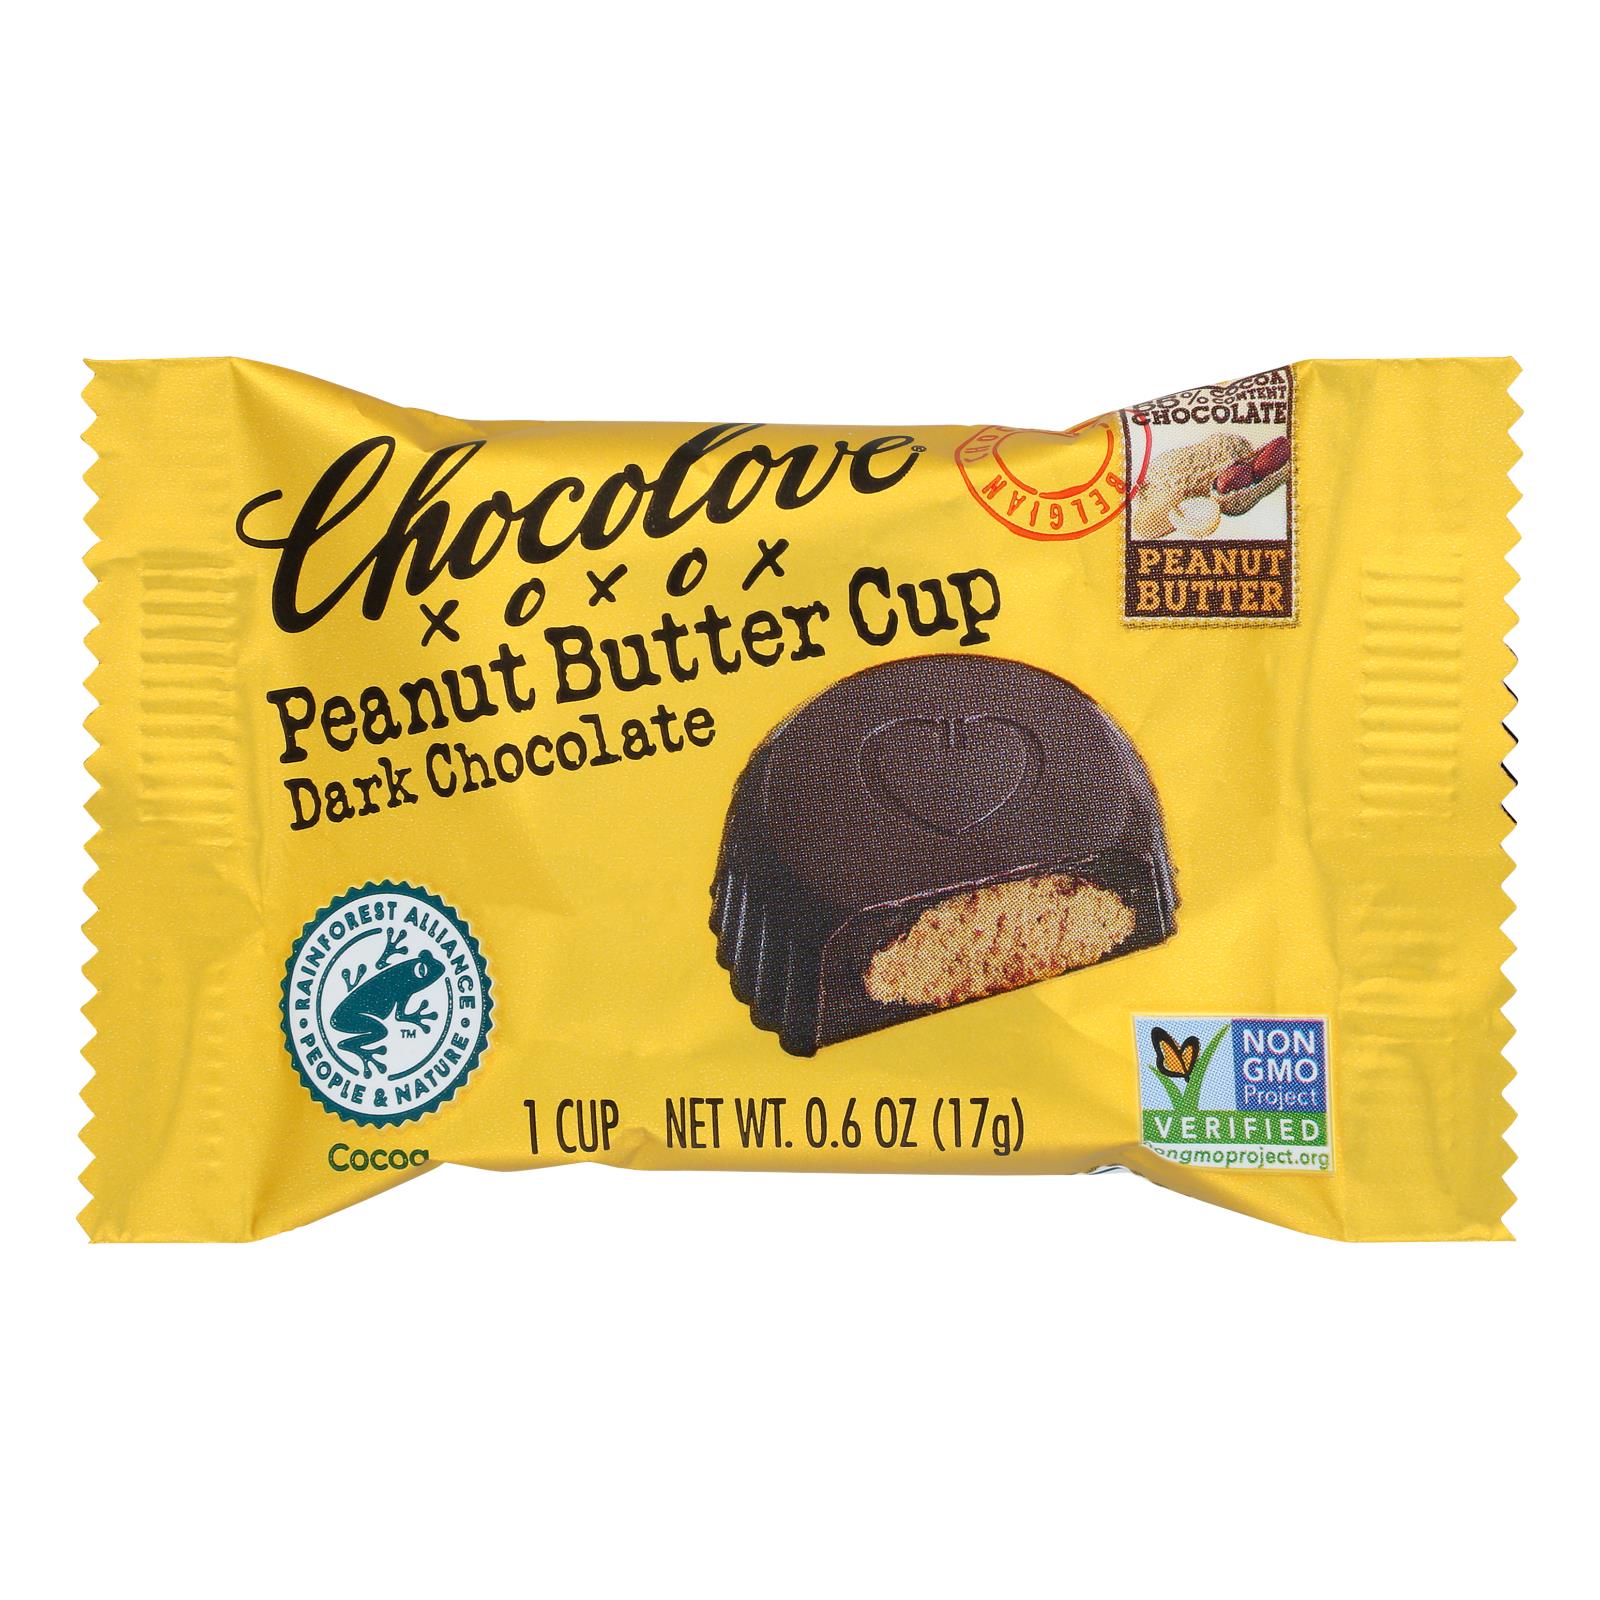 Chocolove Xoxox - Cup - Peanut Butter - Dark Chocolate - Case of 50 - .6 oz